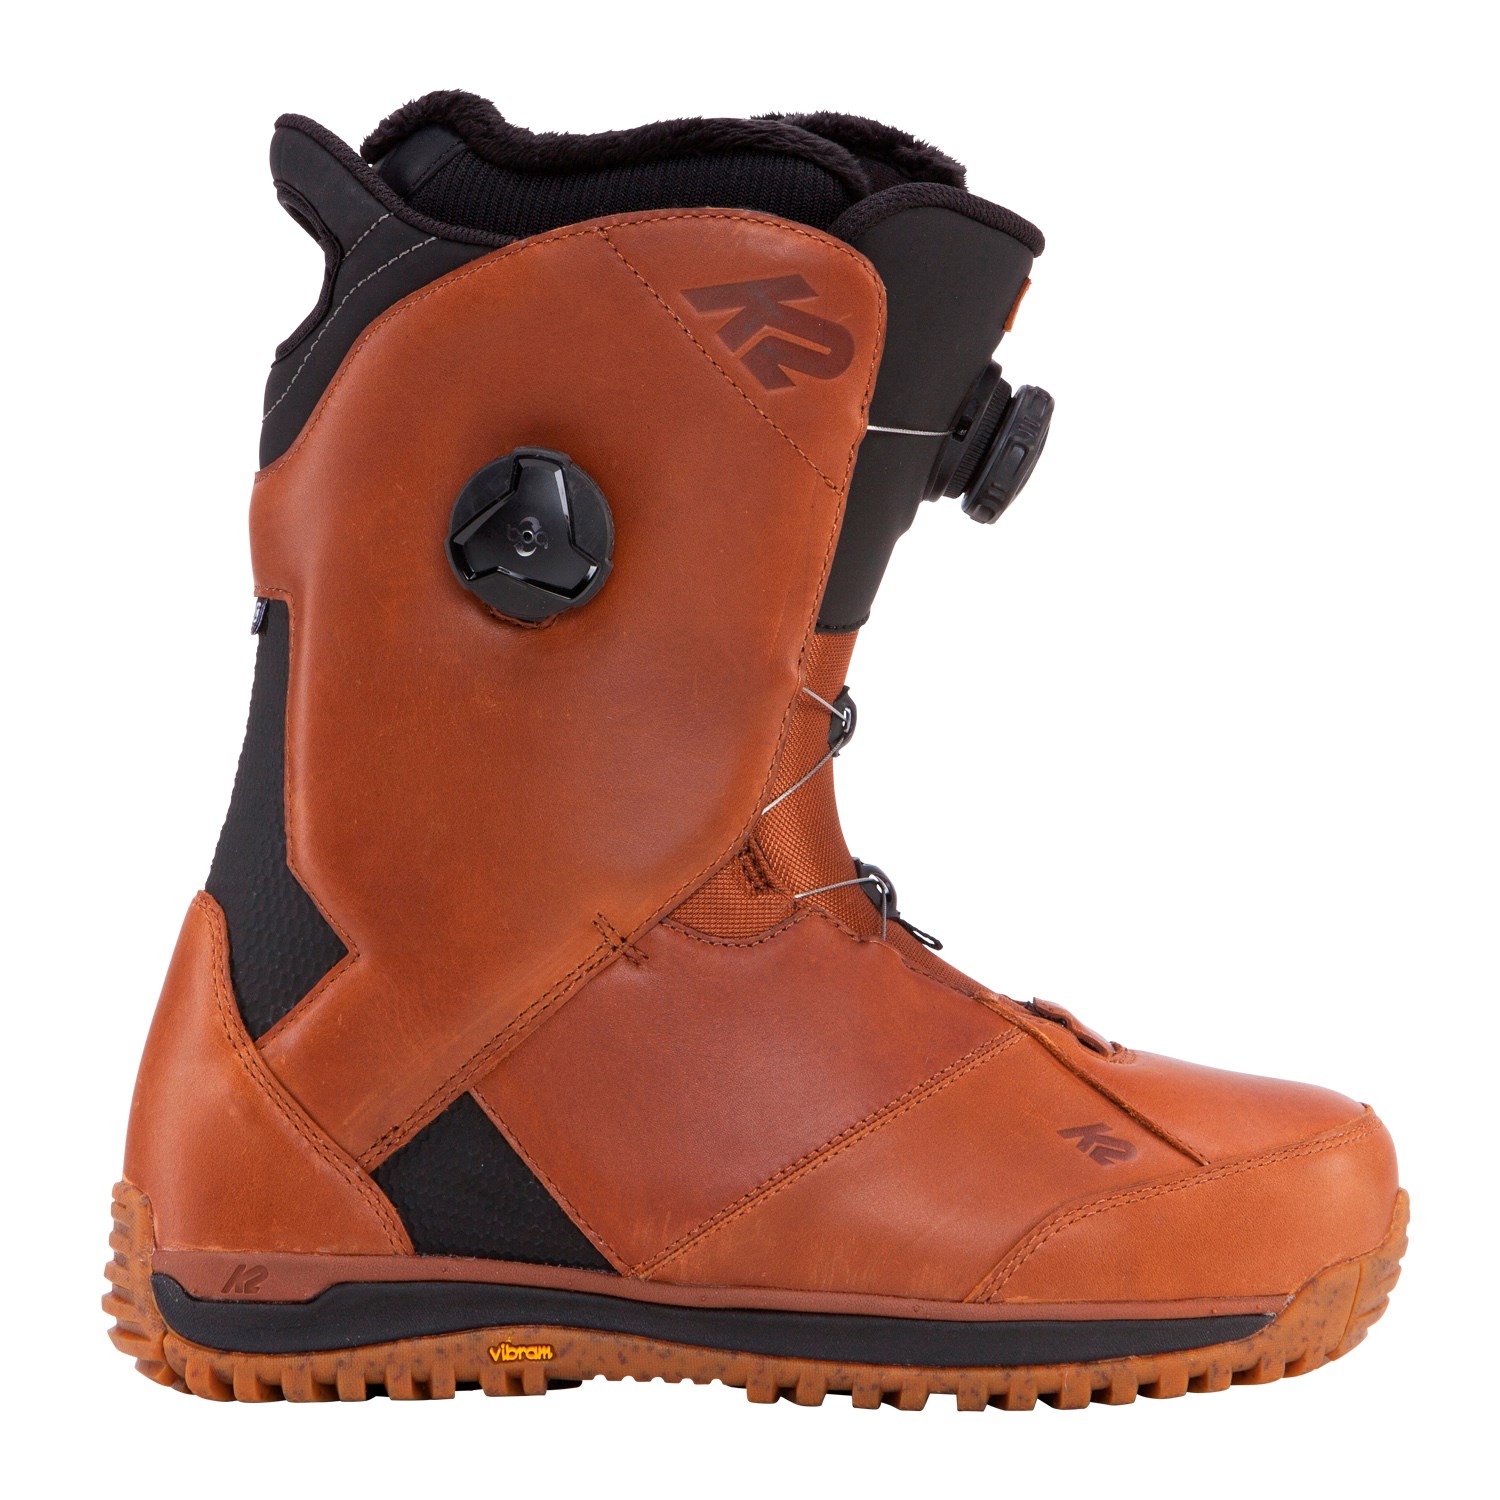 K2 Maysis LTD Snowboard Boots 2018 | evo